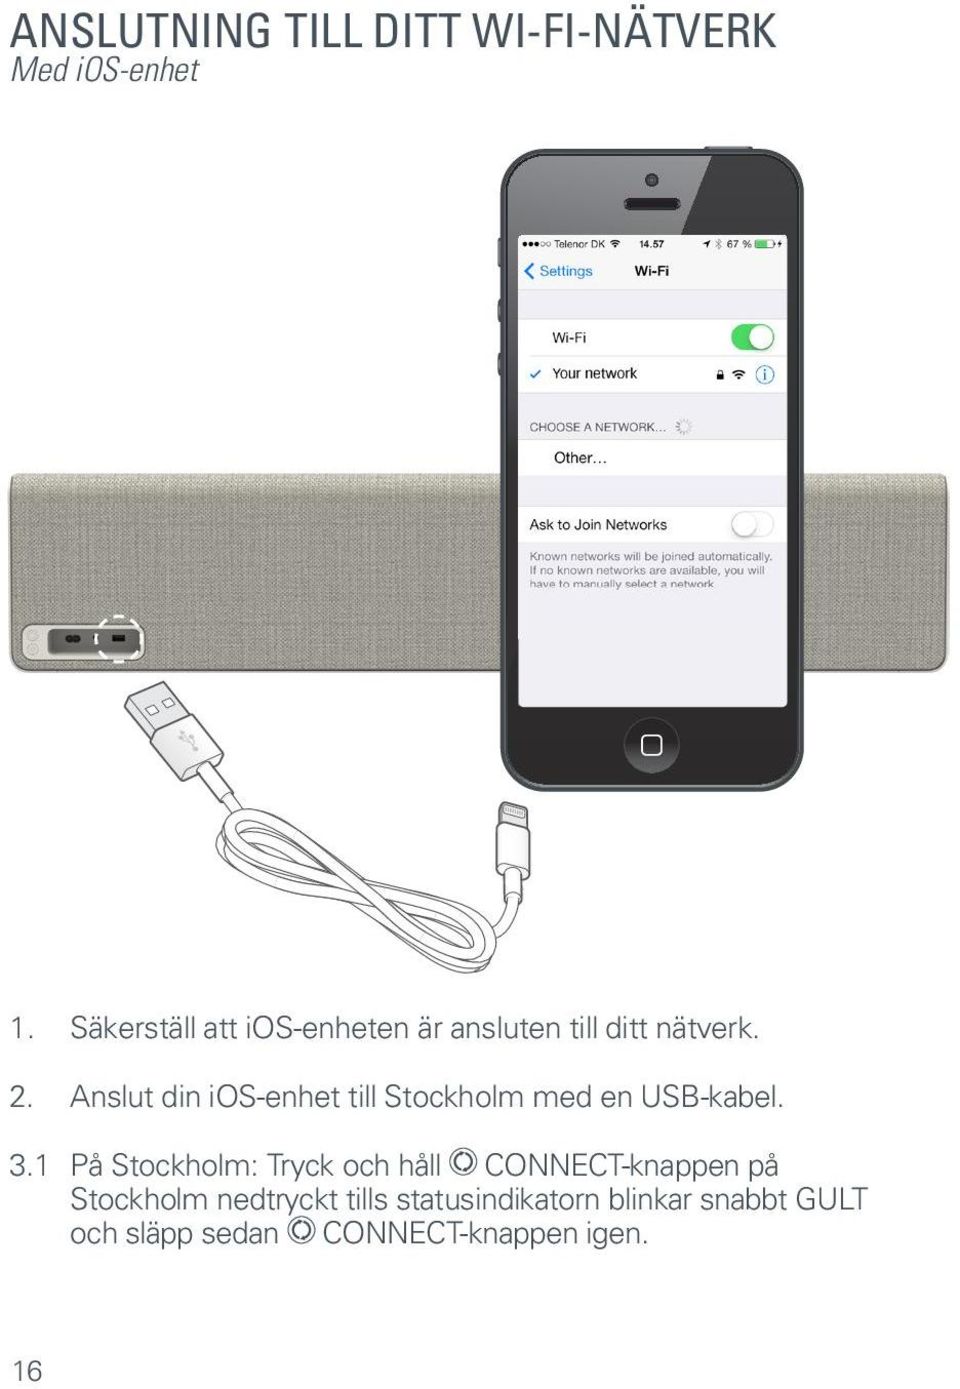 Anslut din ios-enhet till Stockholm med en USB-kabel. 3.